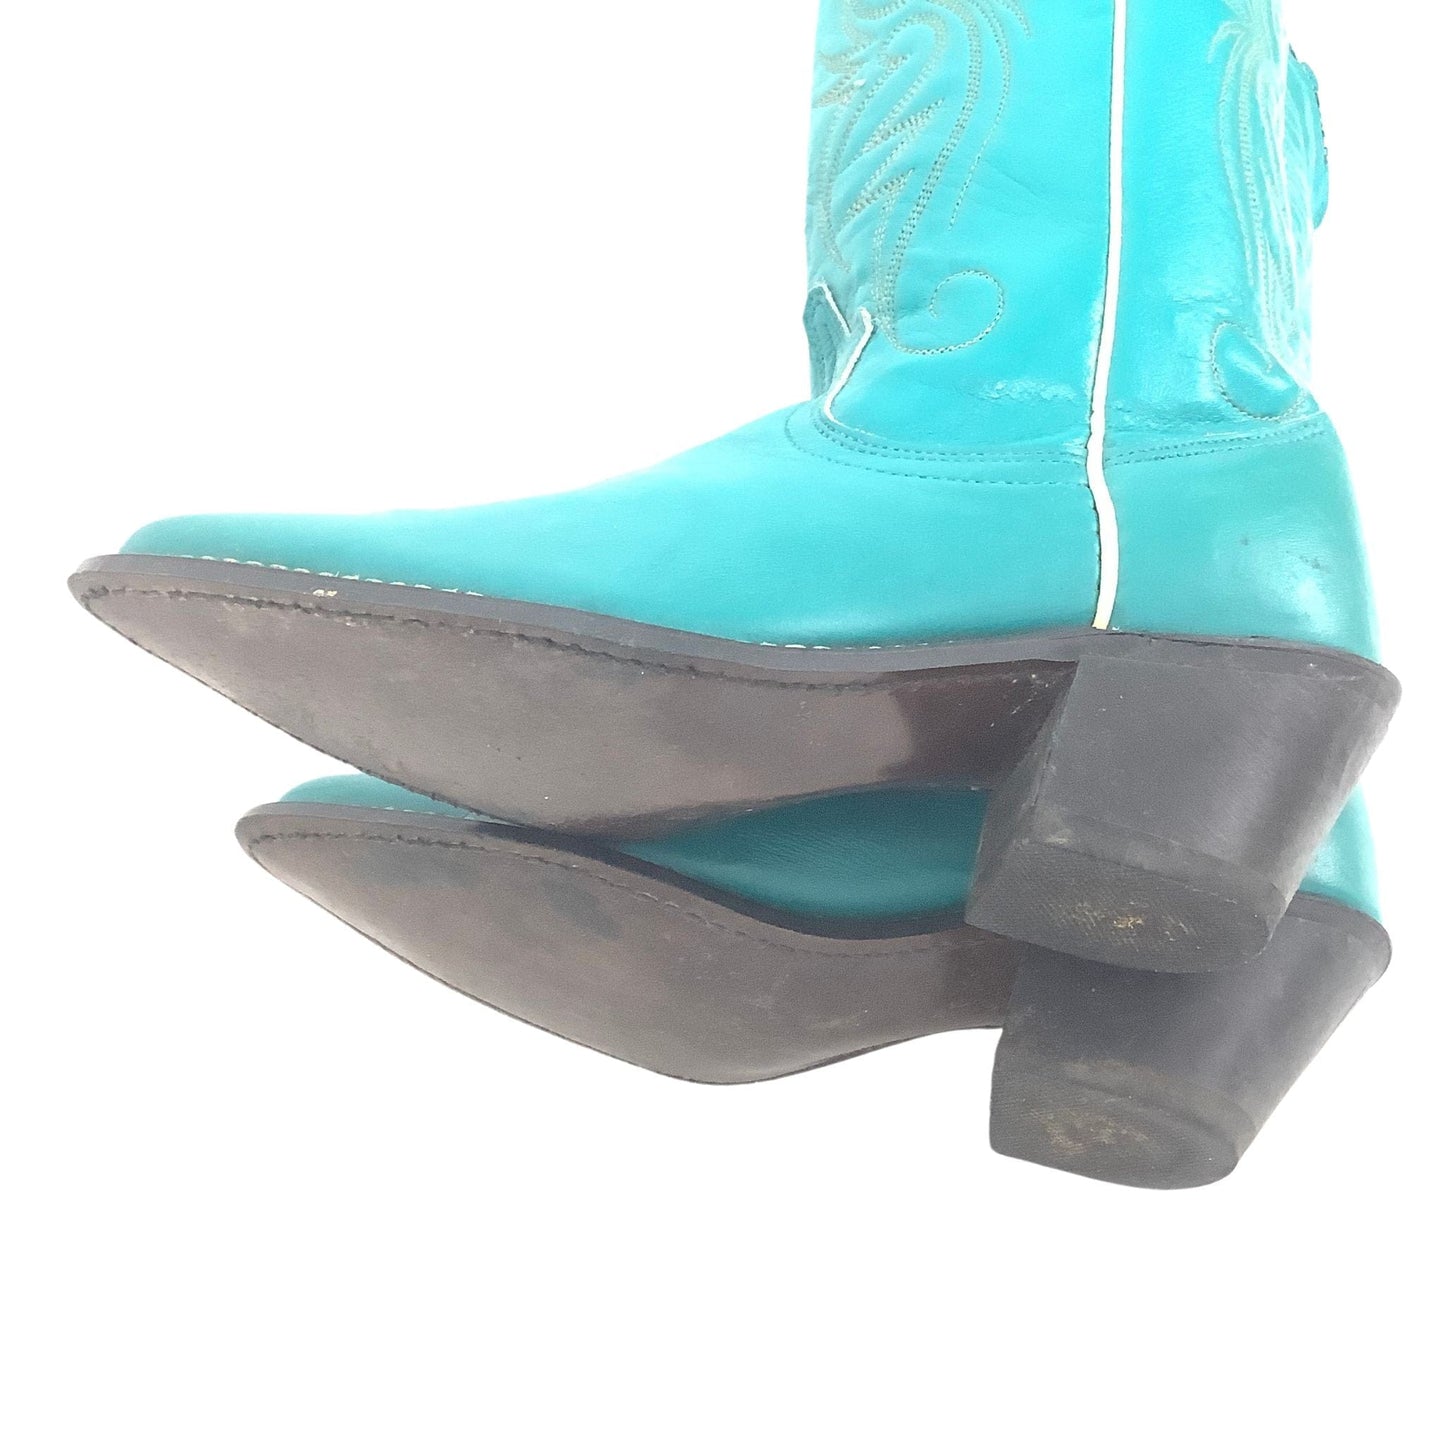 Sheplers Cowboy Boots 7 / Blue / Vintage 1980s